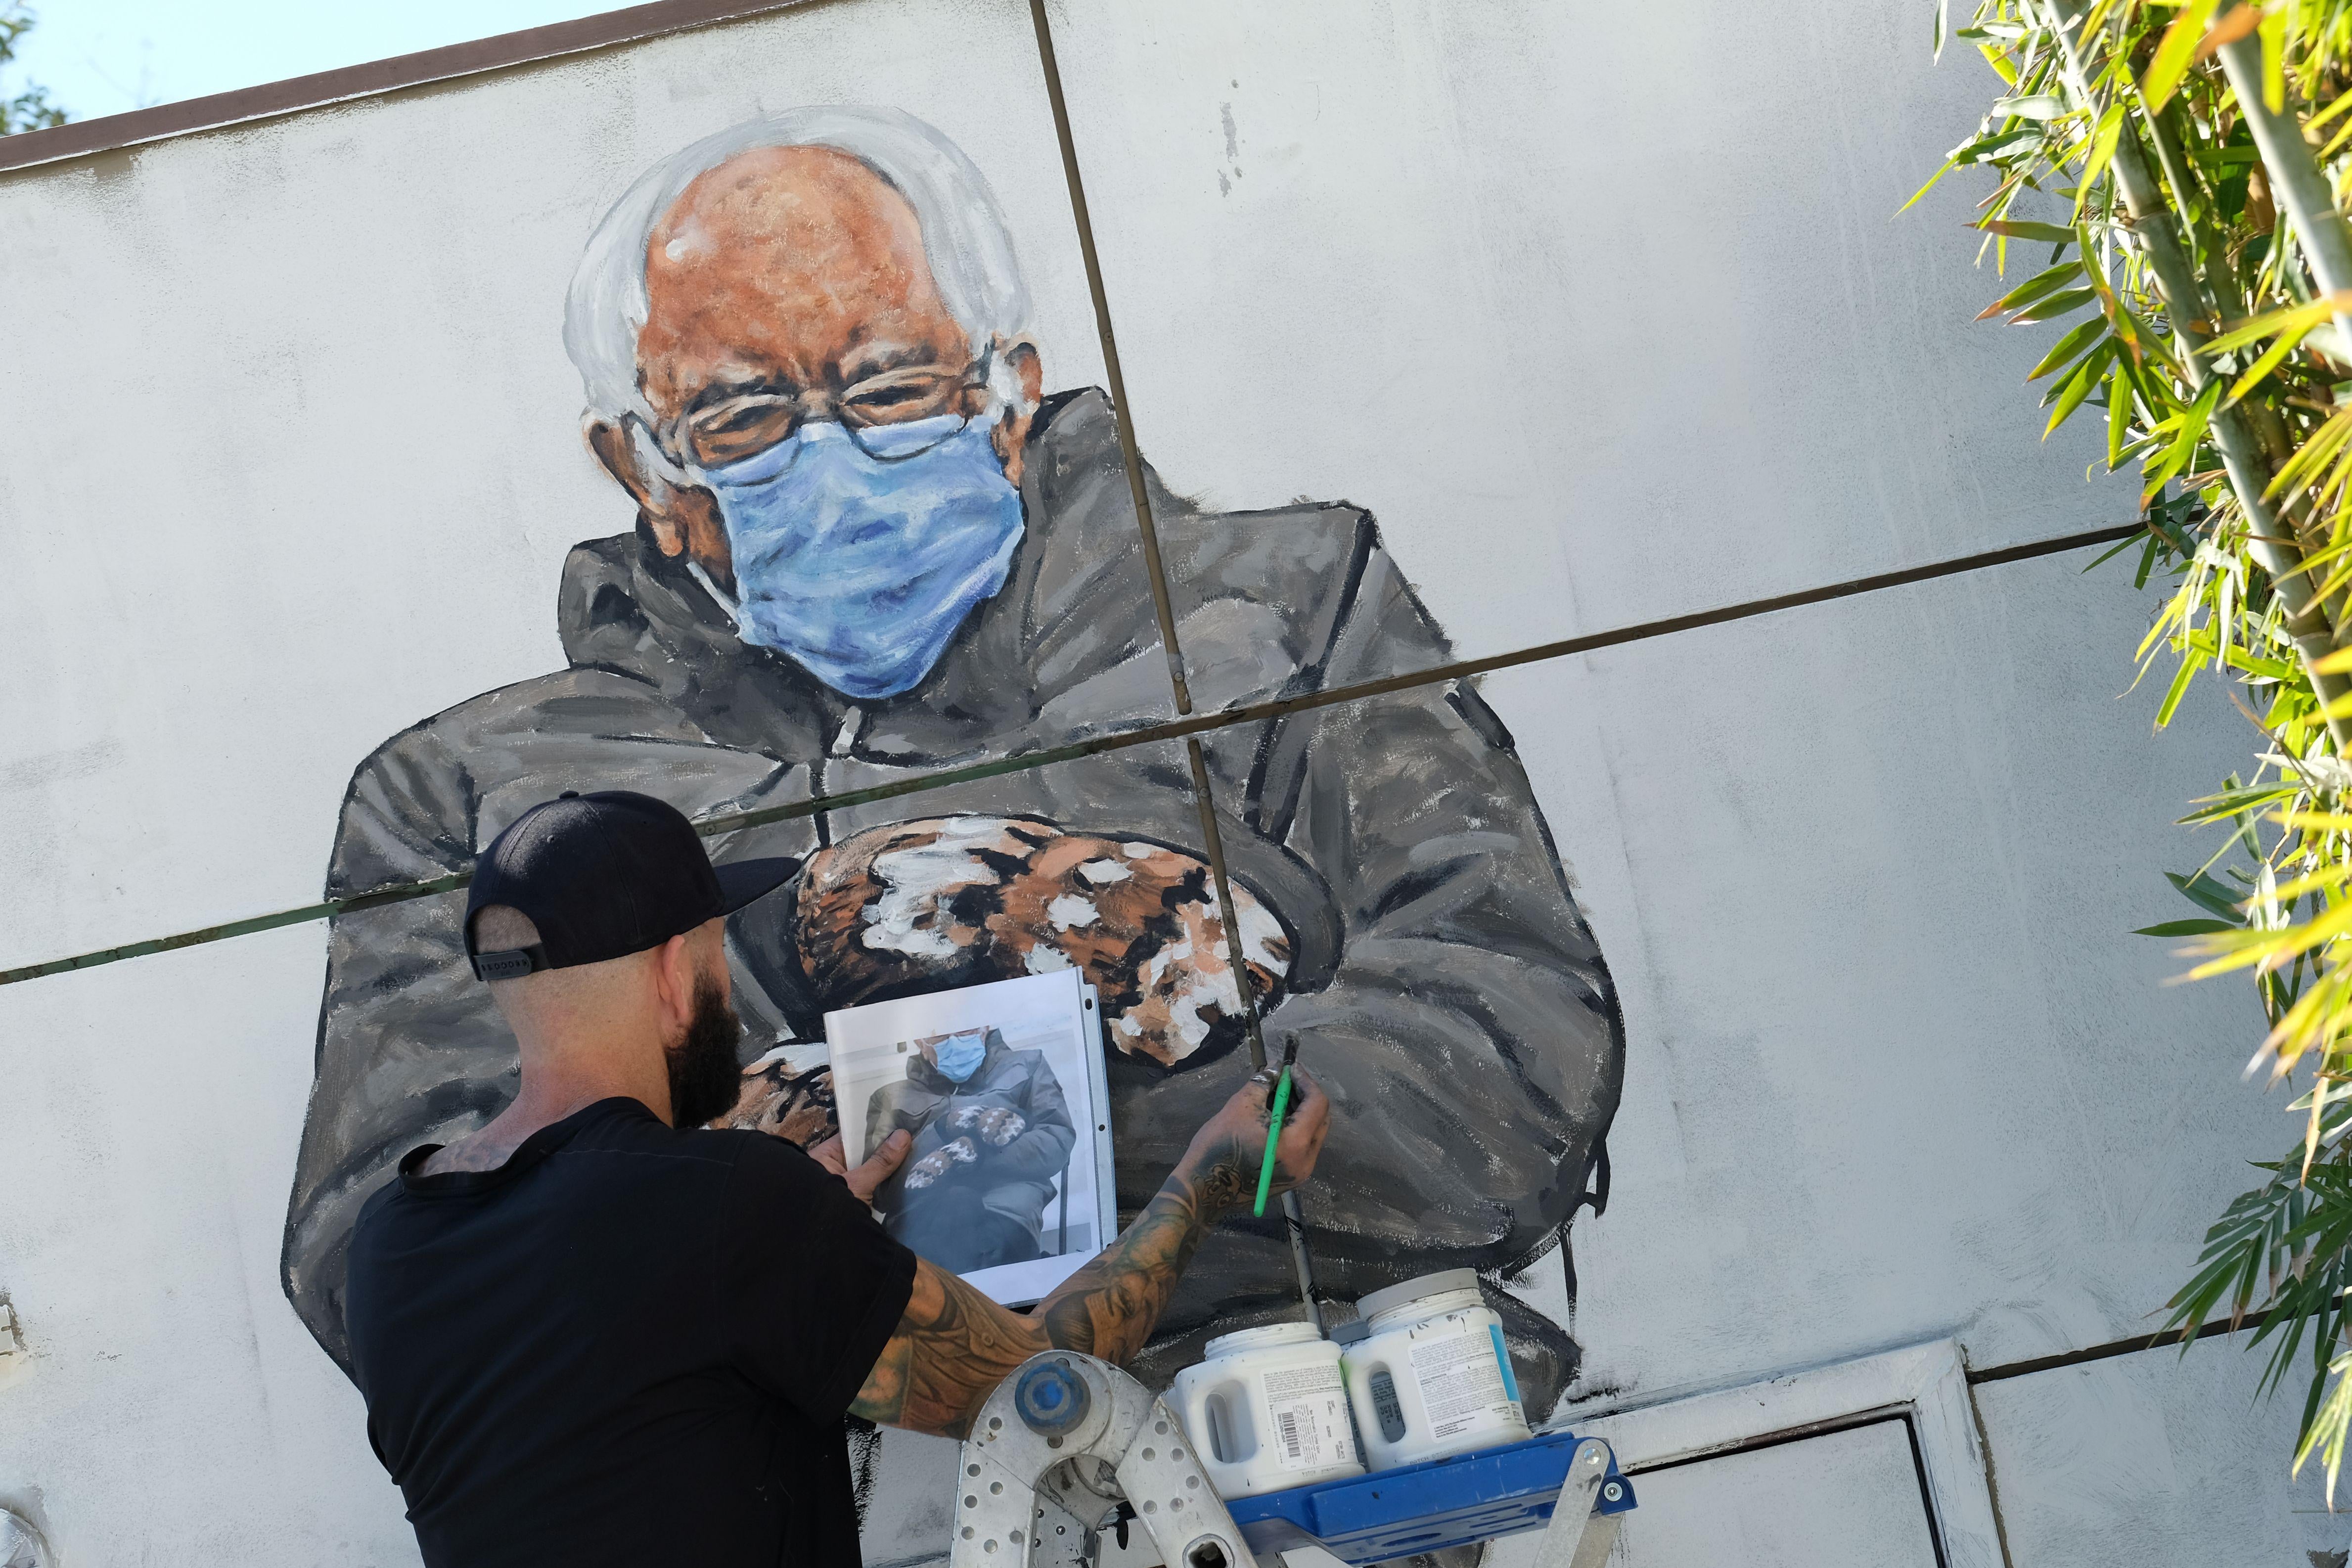 Jonas Never (@never1959) paints a mural of Senator Bernie Sanders in Culver City, California on January 24, 2021. 